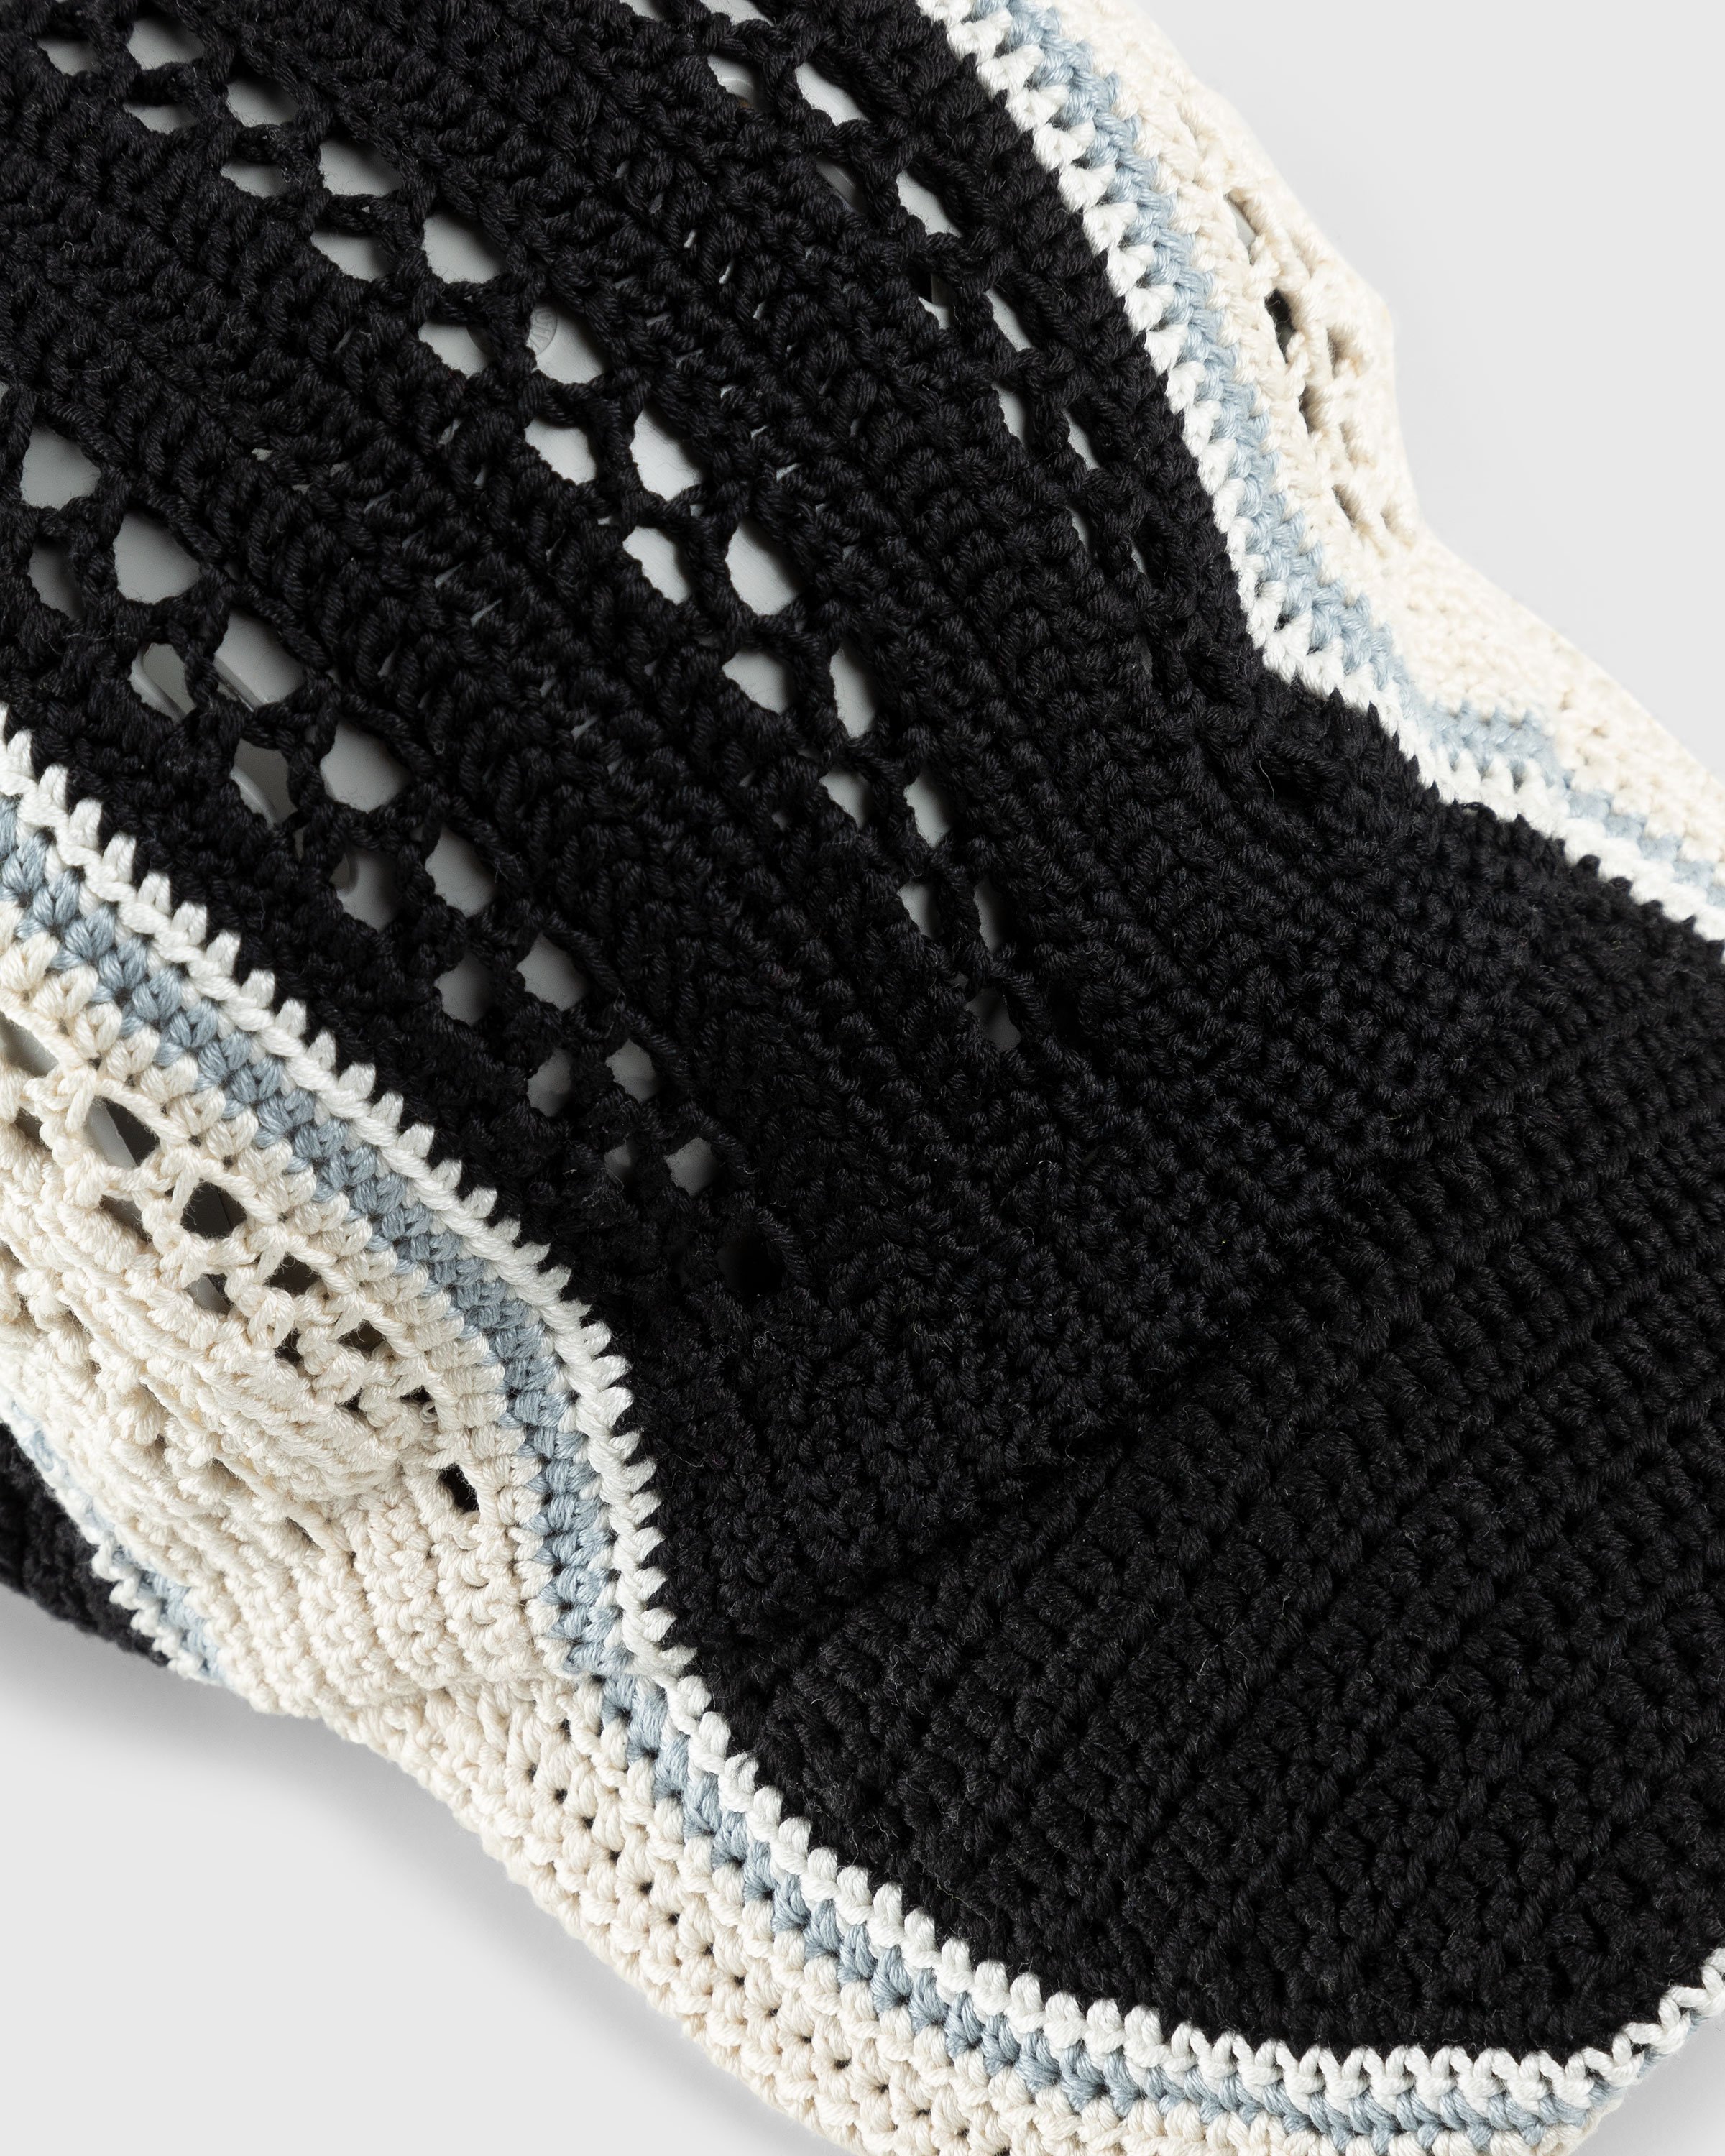 SSU - Crochet Baseball Cap Midnight Drive Black - Accessories - Black - Image 5